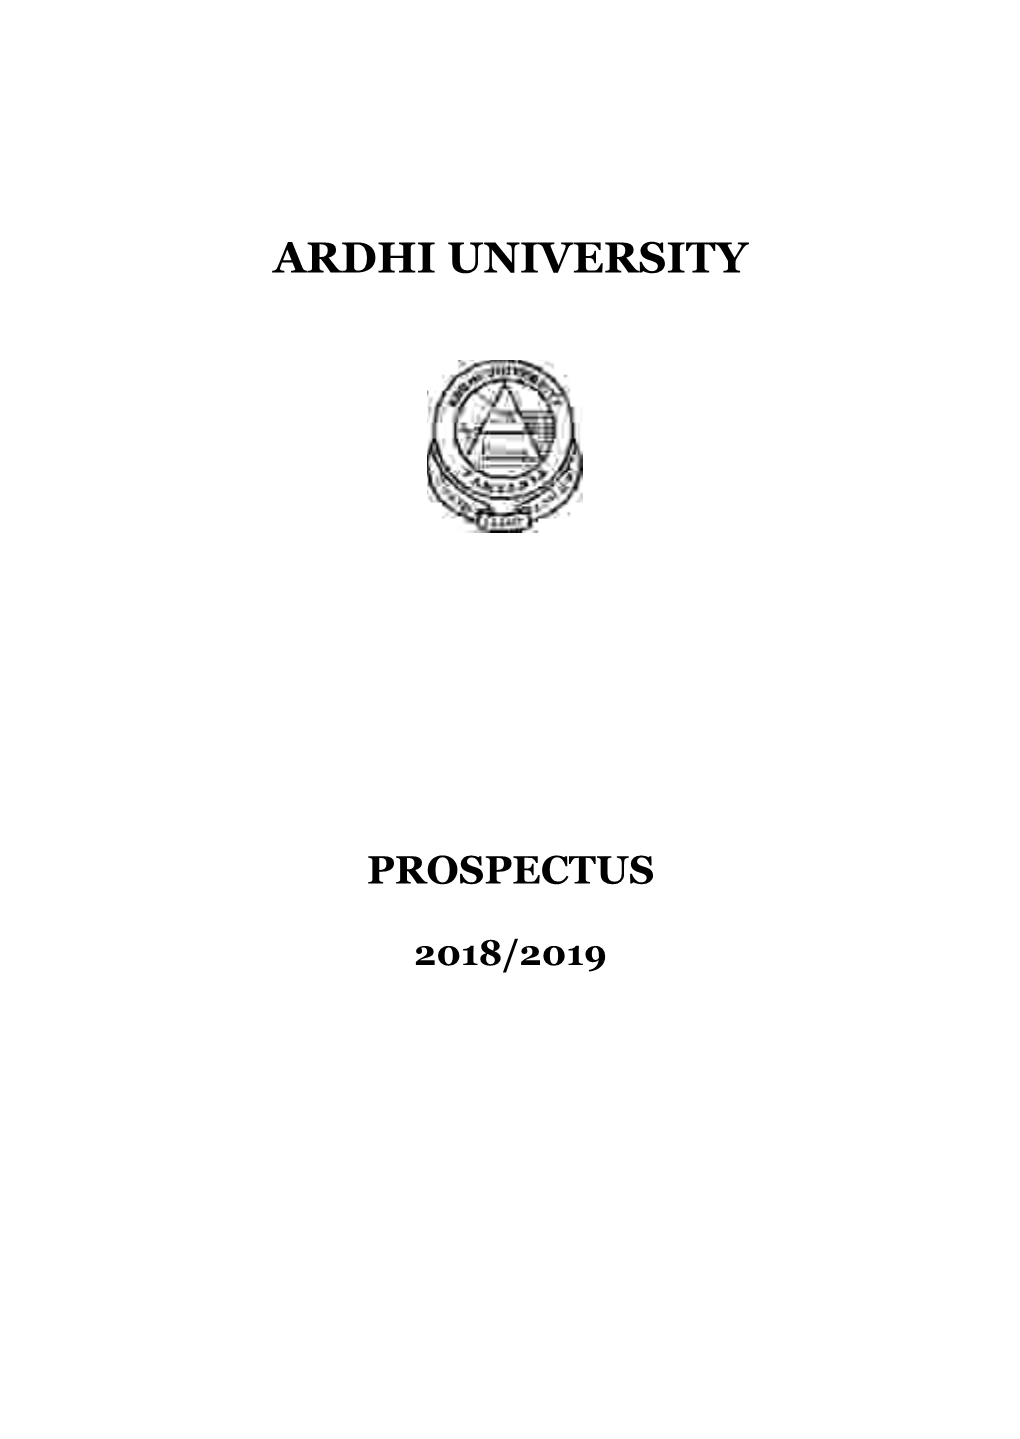 Senior Officers of Ardhi University